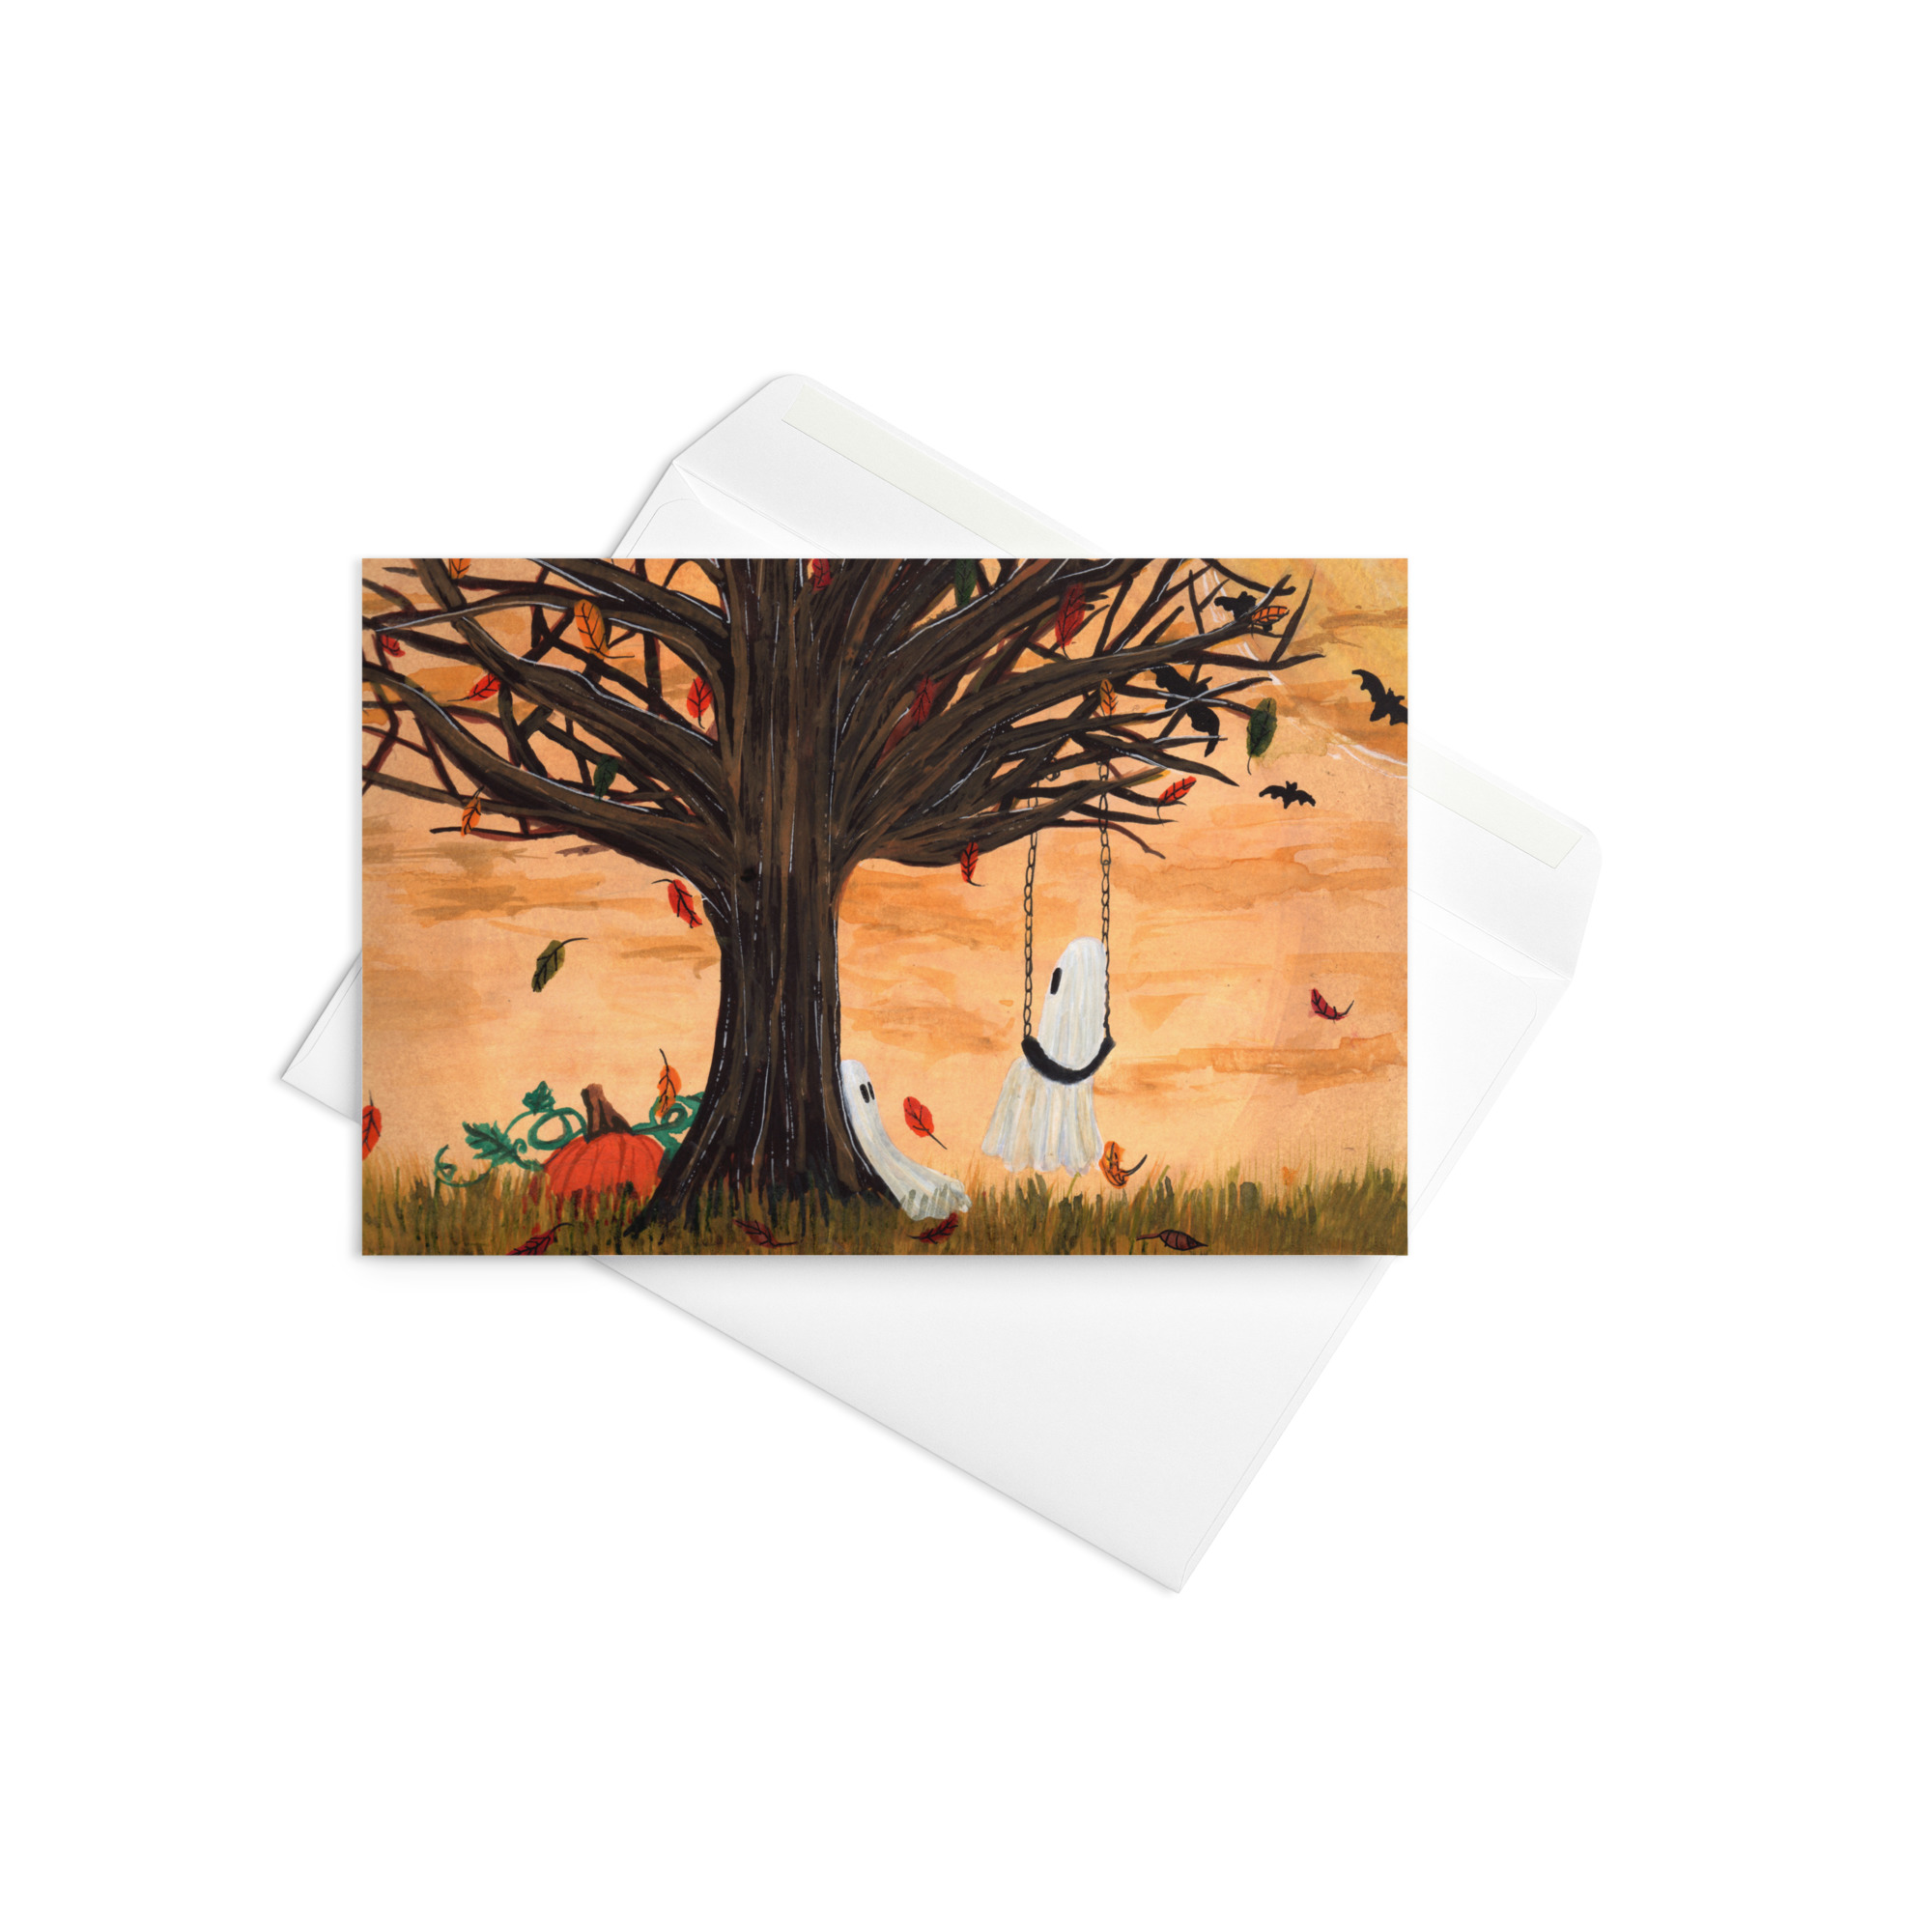 greeting-card-4×6-front-6329d4c0db8a0.jpg